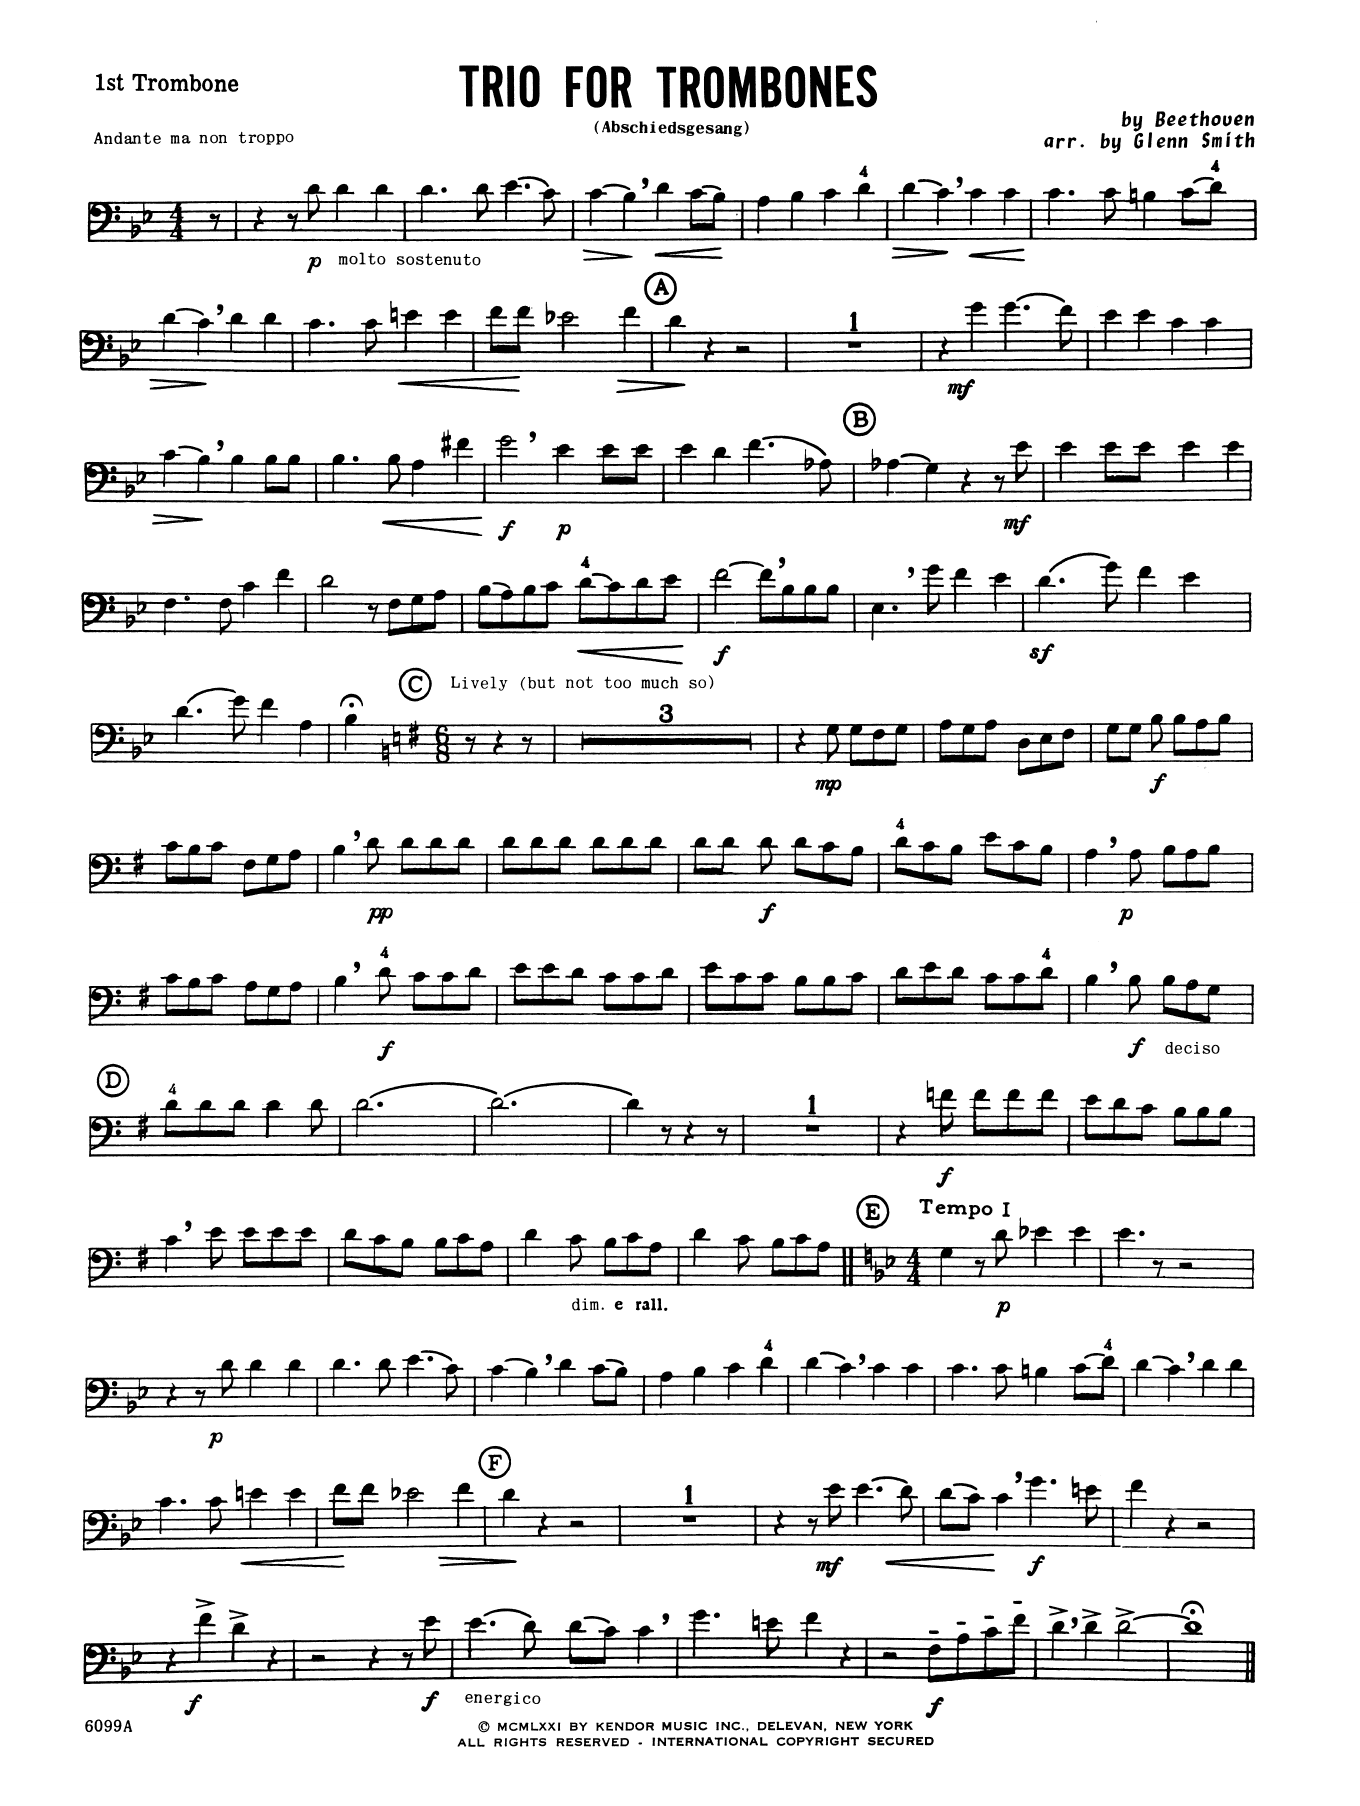 Download Glenn Smith Trio For Trombones (Abschiedsgesang) - Sheet Music